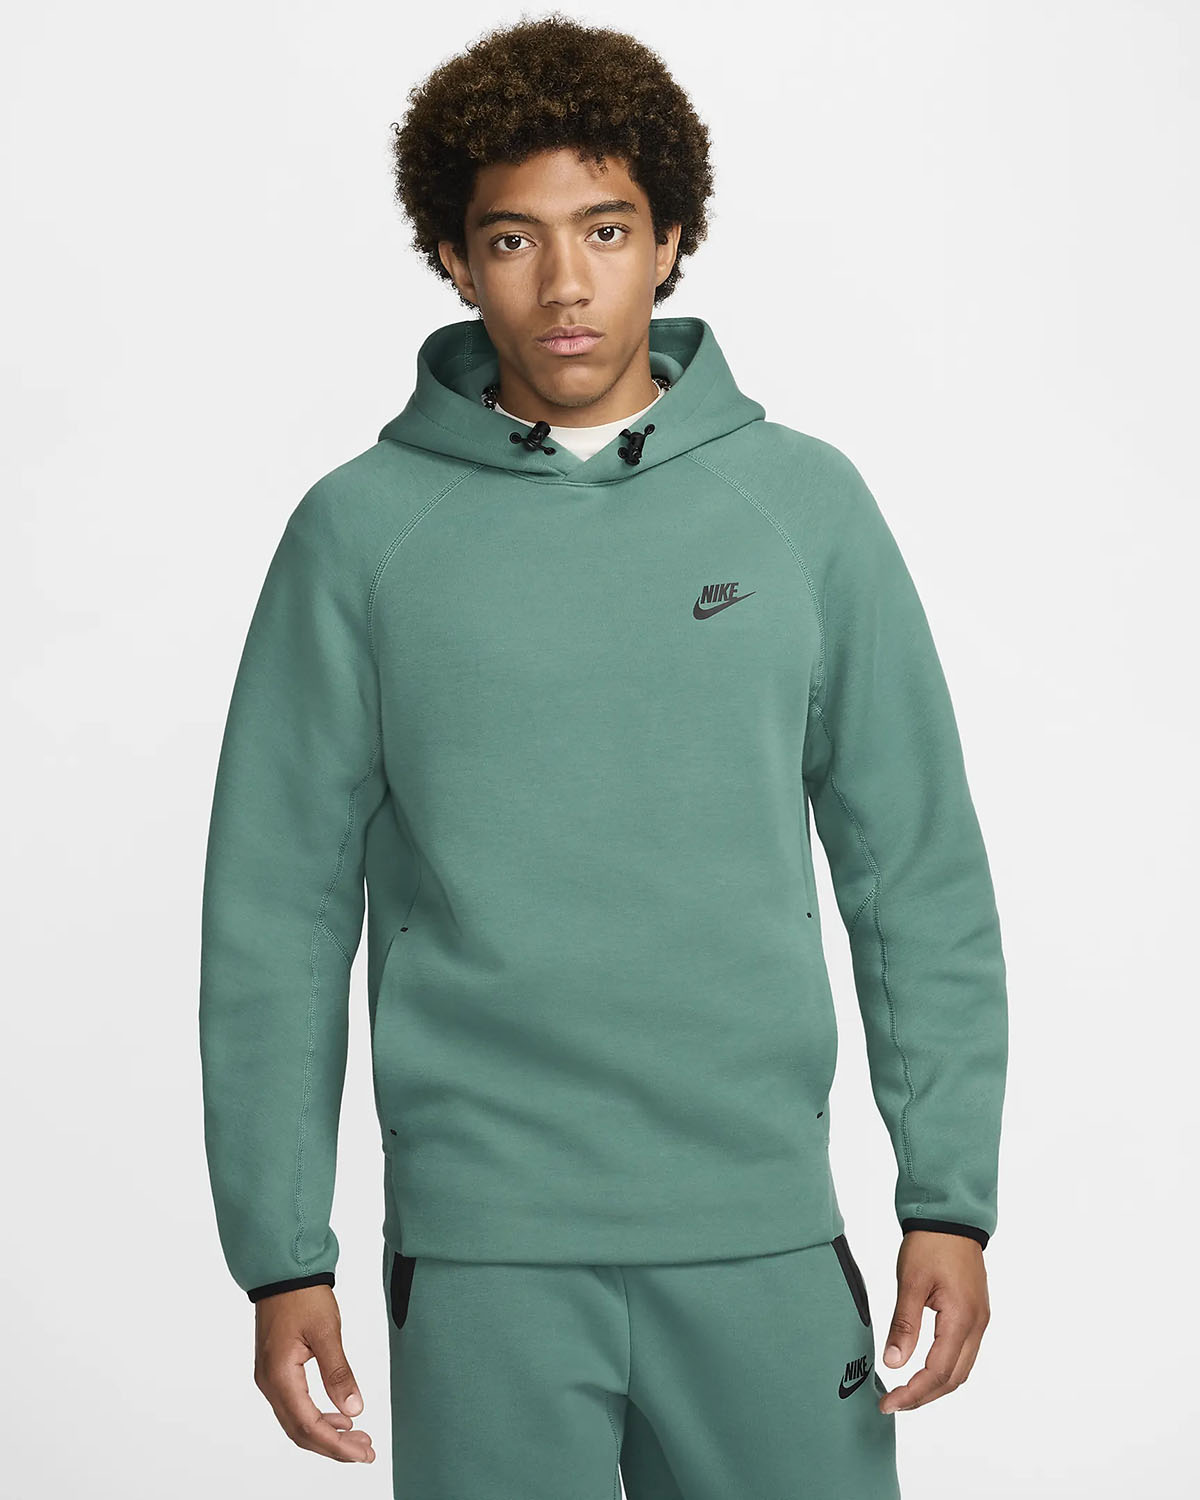 Nike Tech Fleece Pullover Hoodie Bicoastal